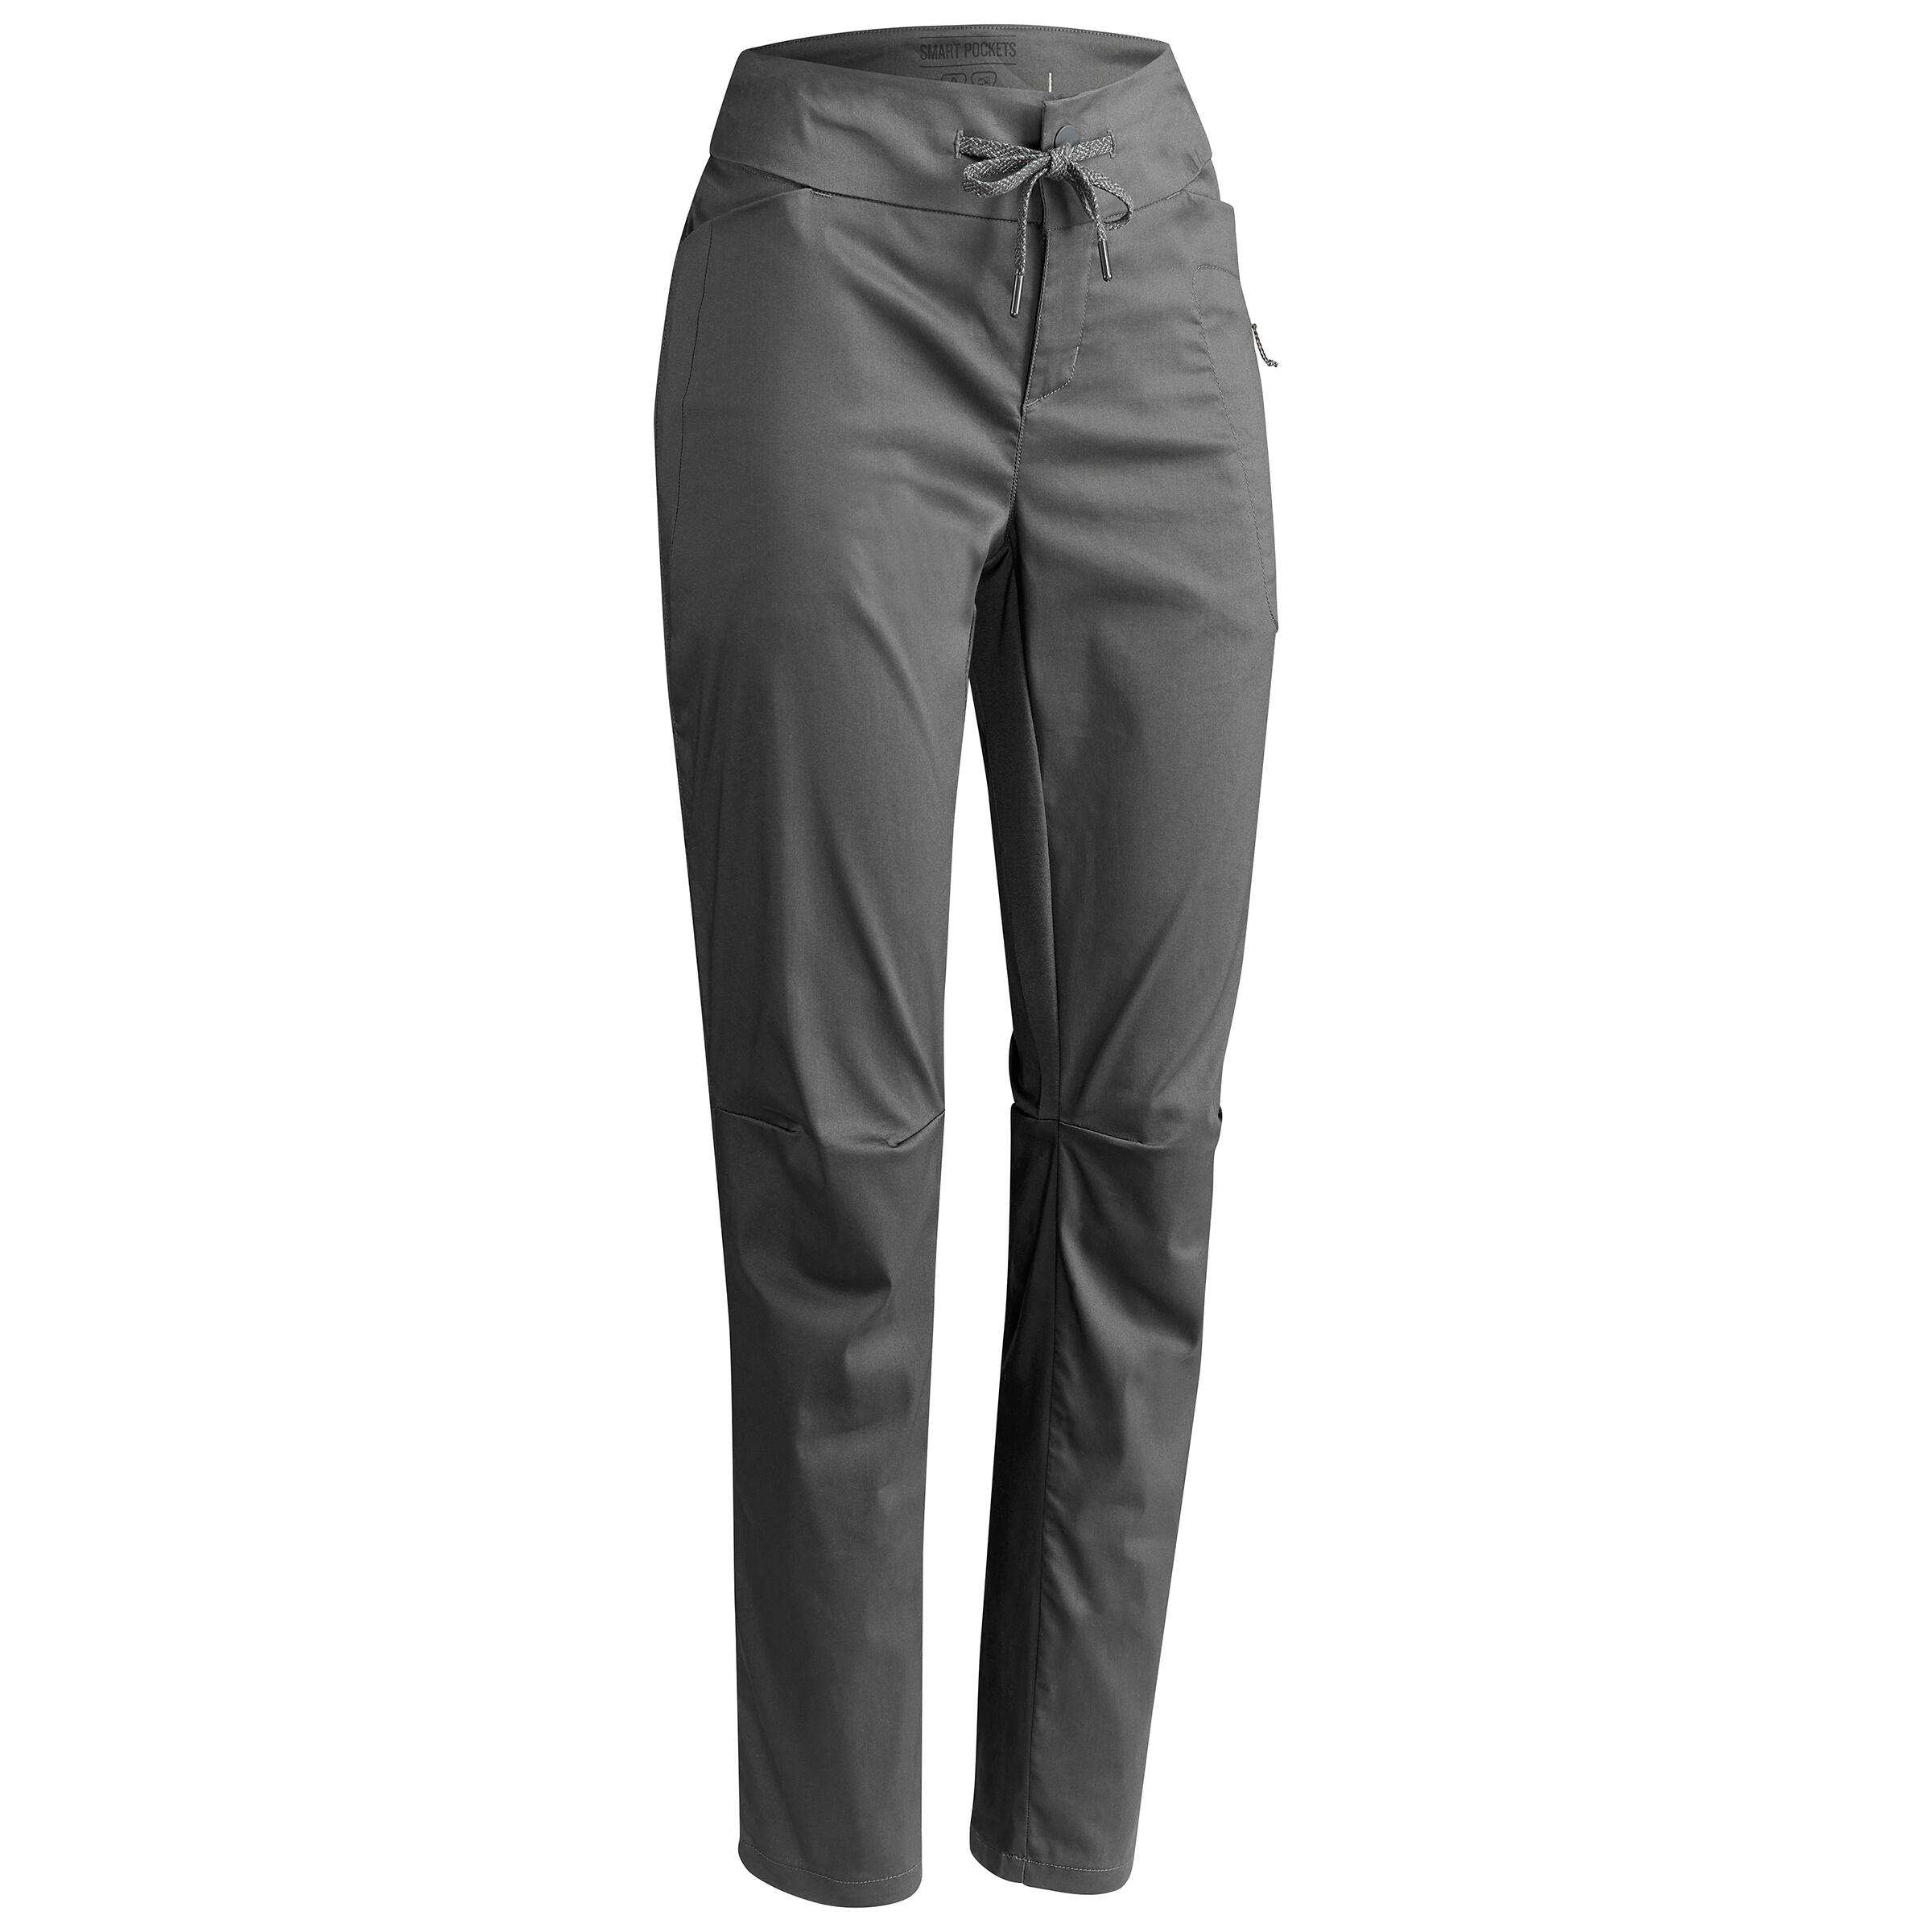 Buy Mens Khaki Slim Fit Hiking Pants NH500 Online  Decathlon